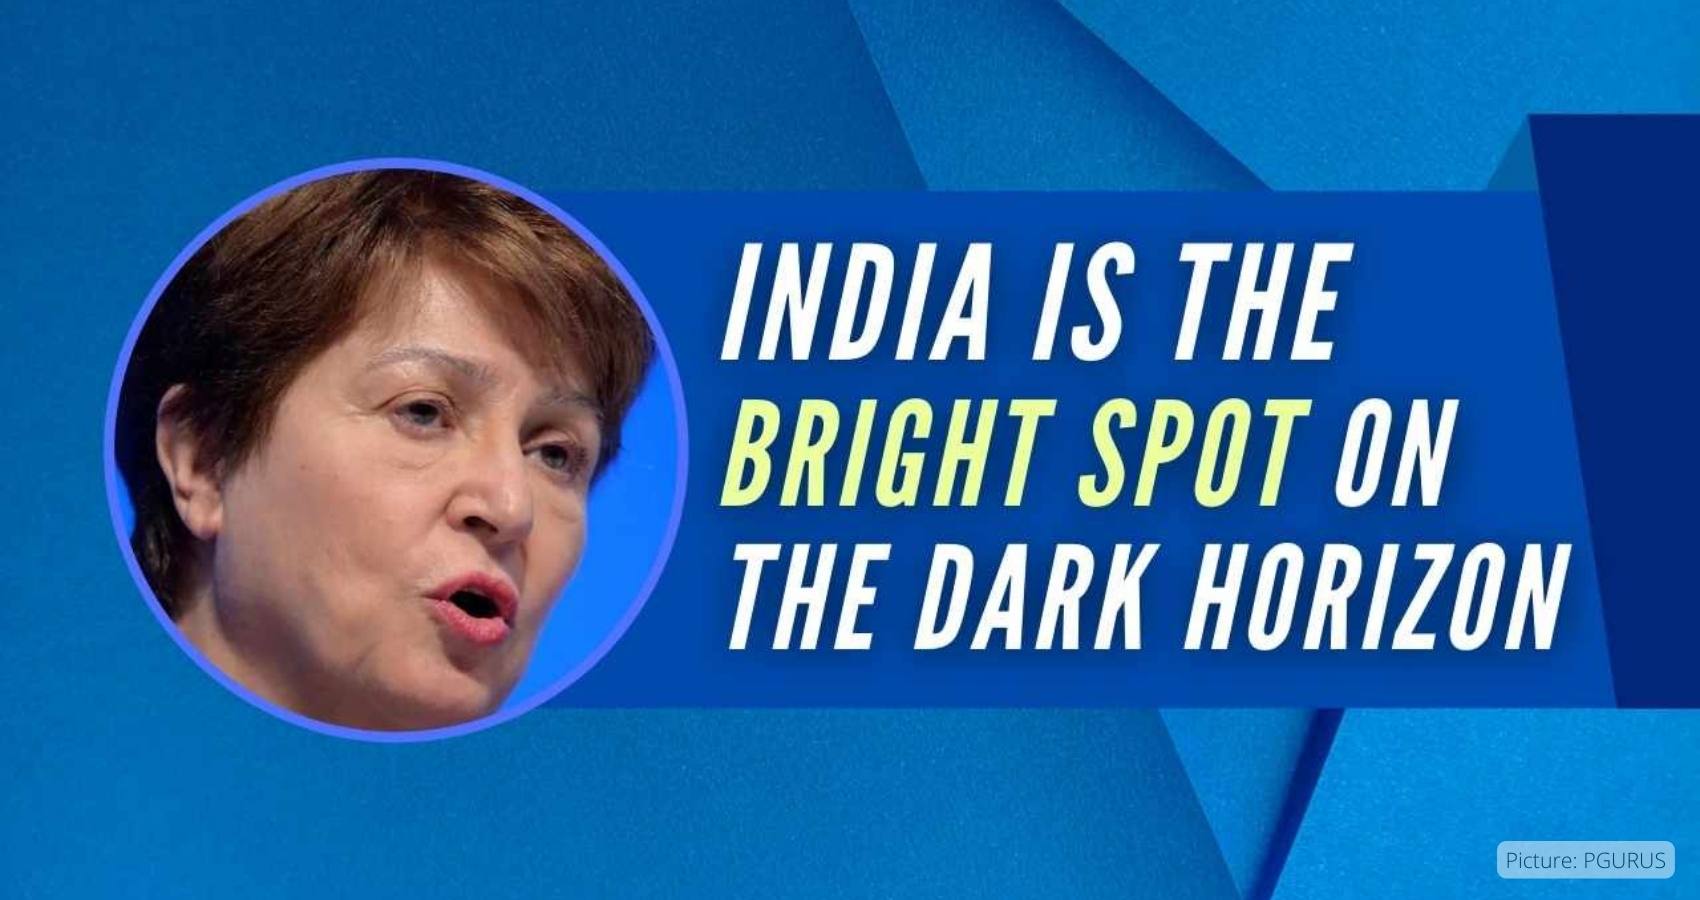 India A Bright Spot On Otherwise Dark Horizon: IMF Chief